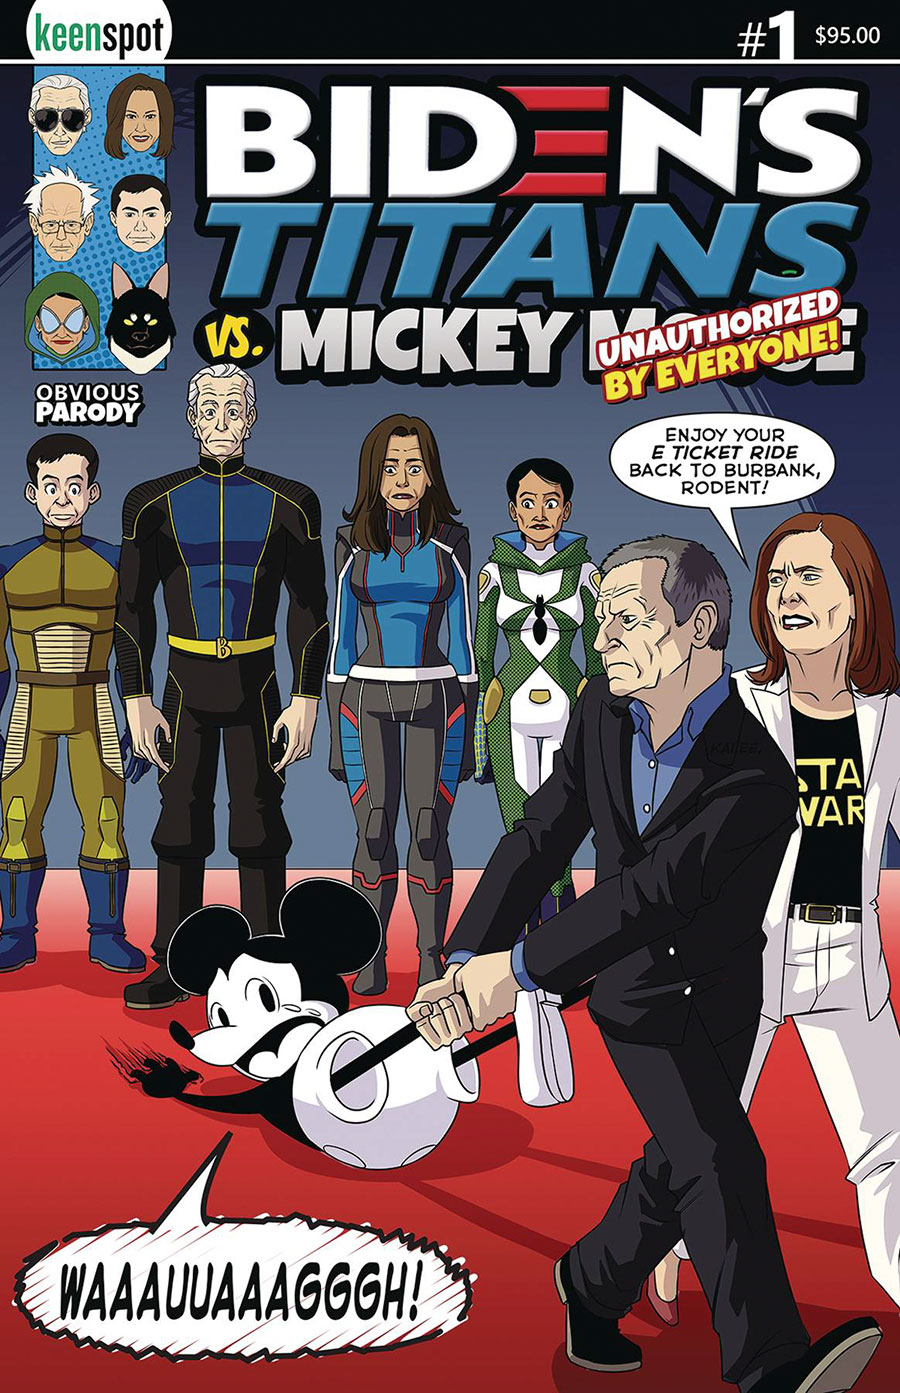 Bidens Titans vs Mickey Mouse (Unauthorized) #1 Cover E Variant E Ticket Cover